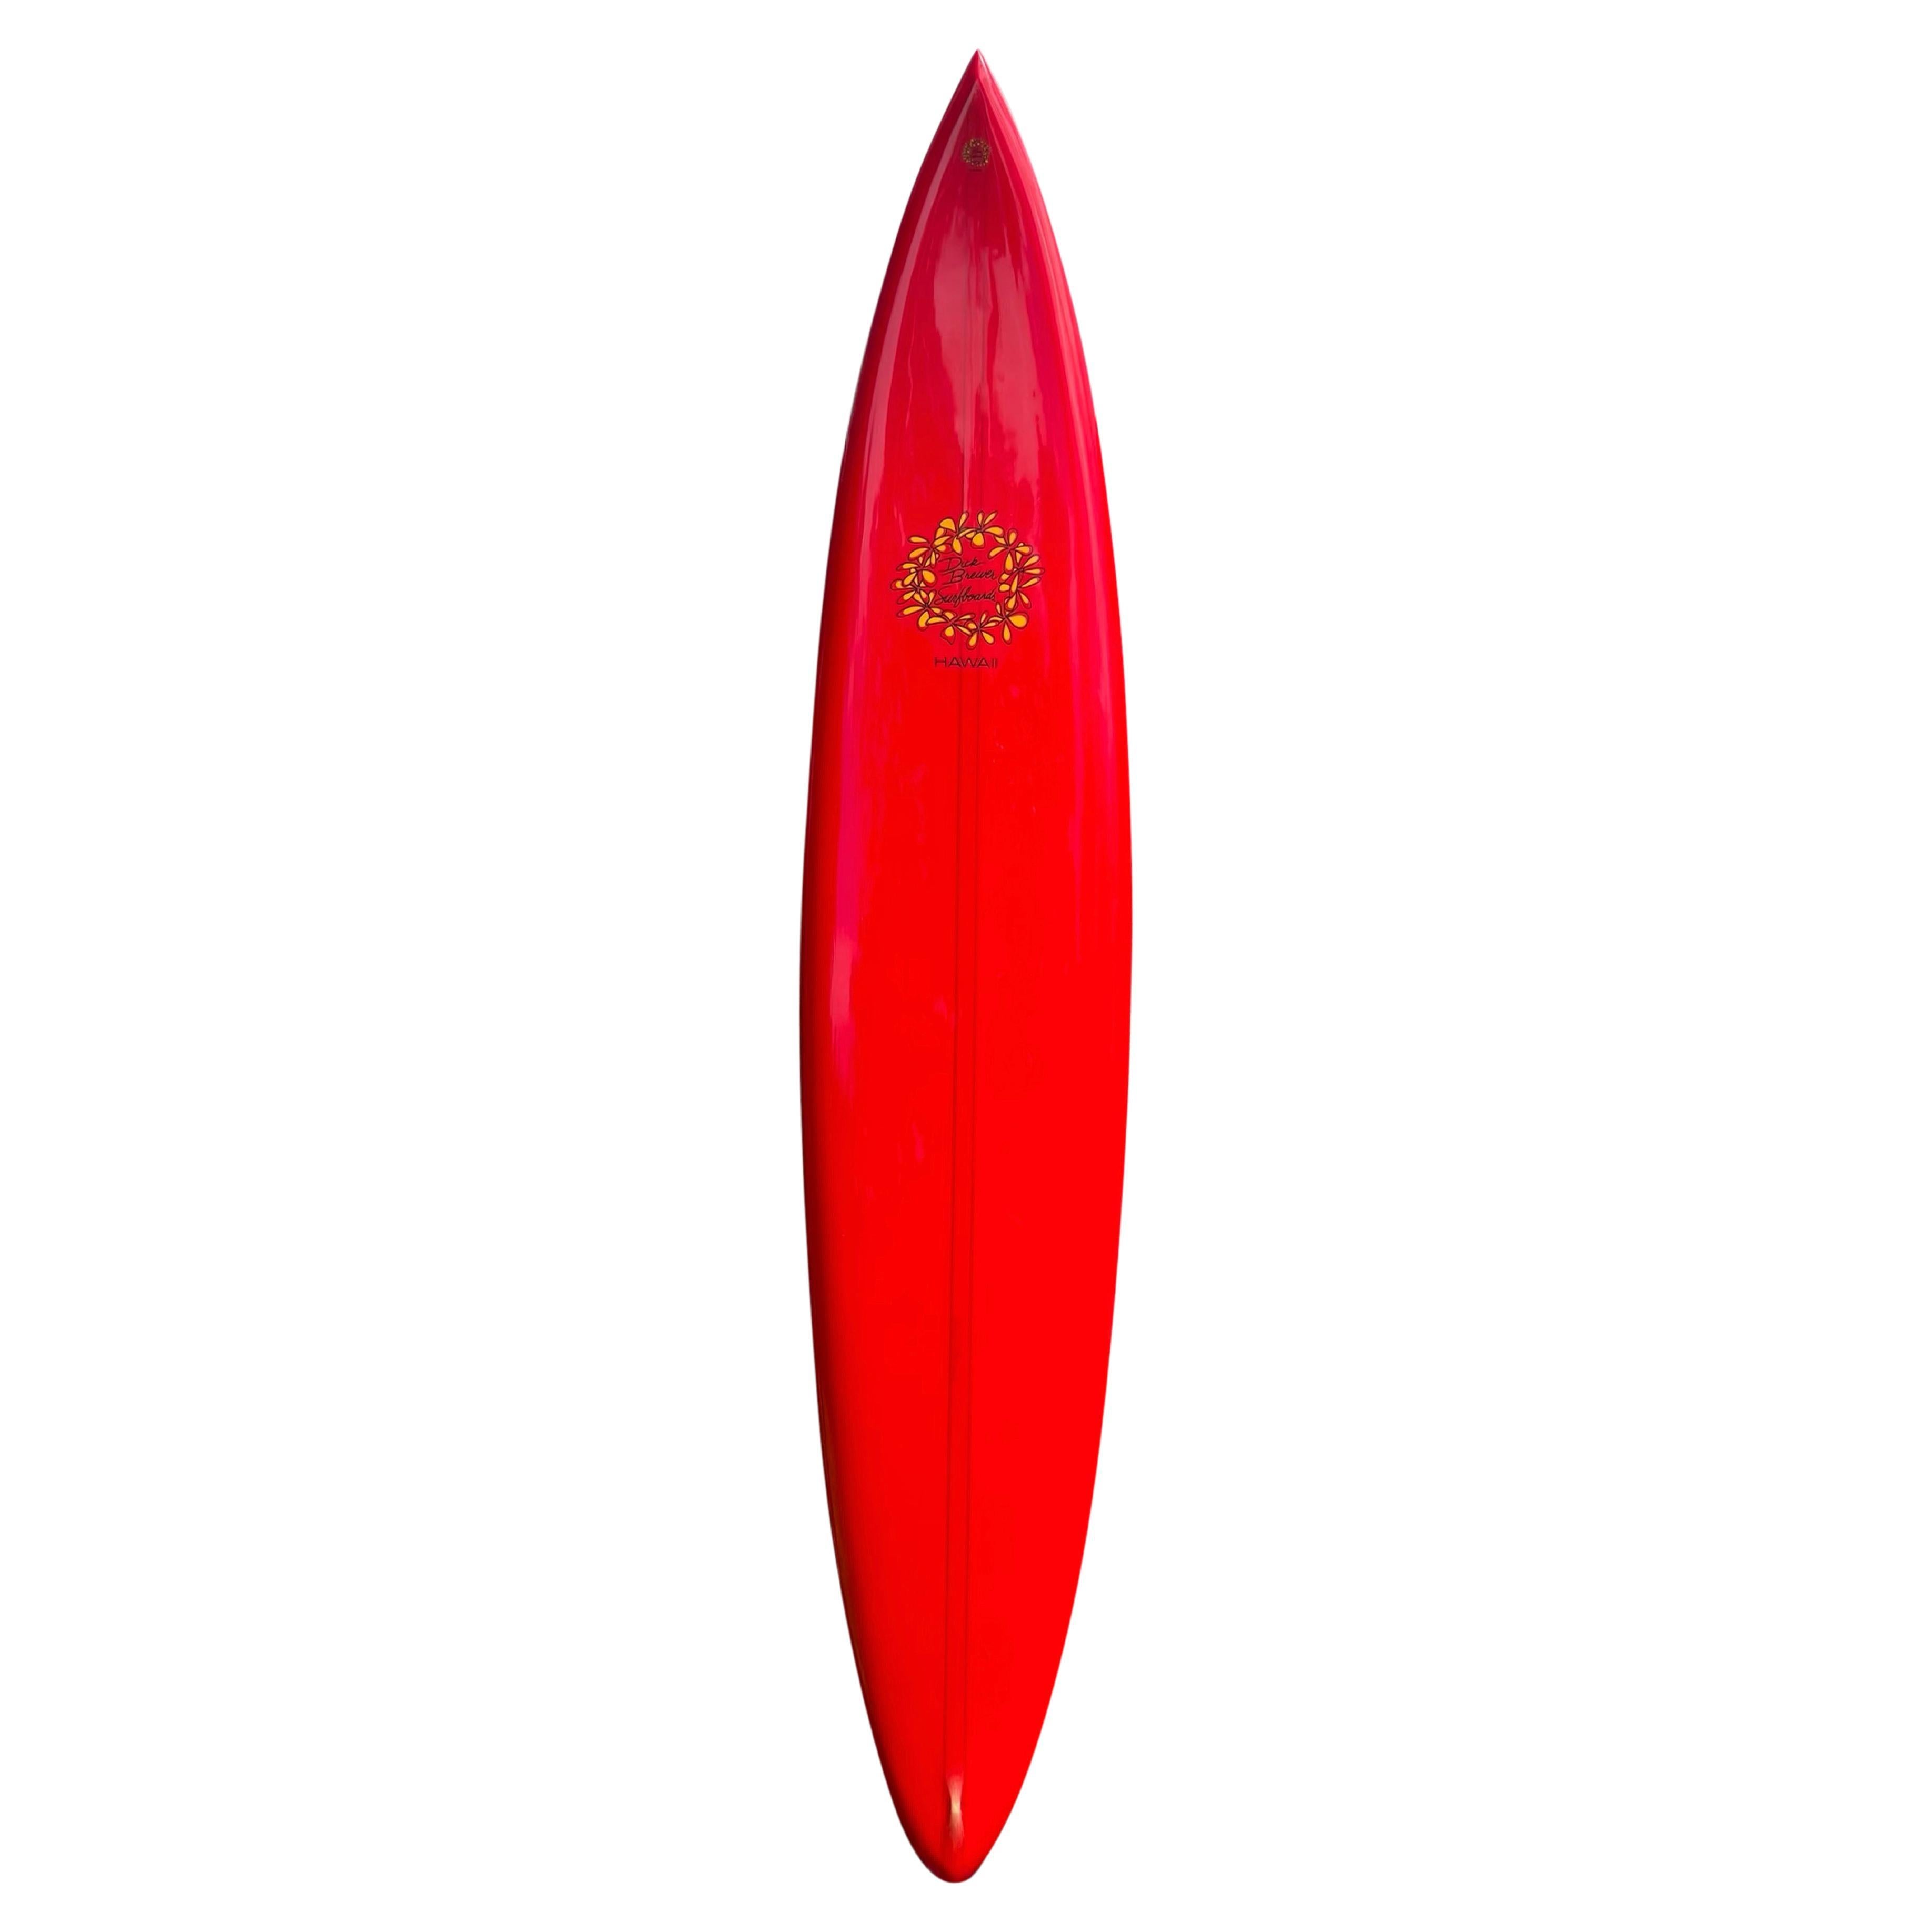 Waimea Bay Big Wave surfboard by Dick Brewer For Sale